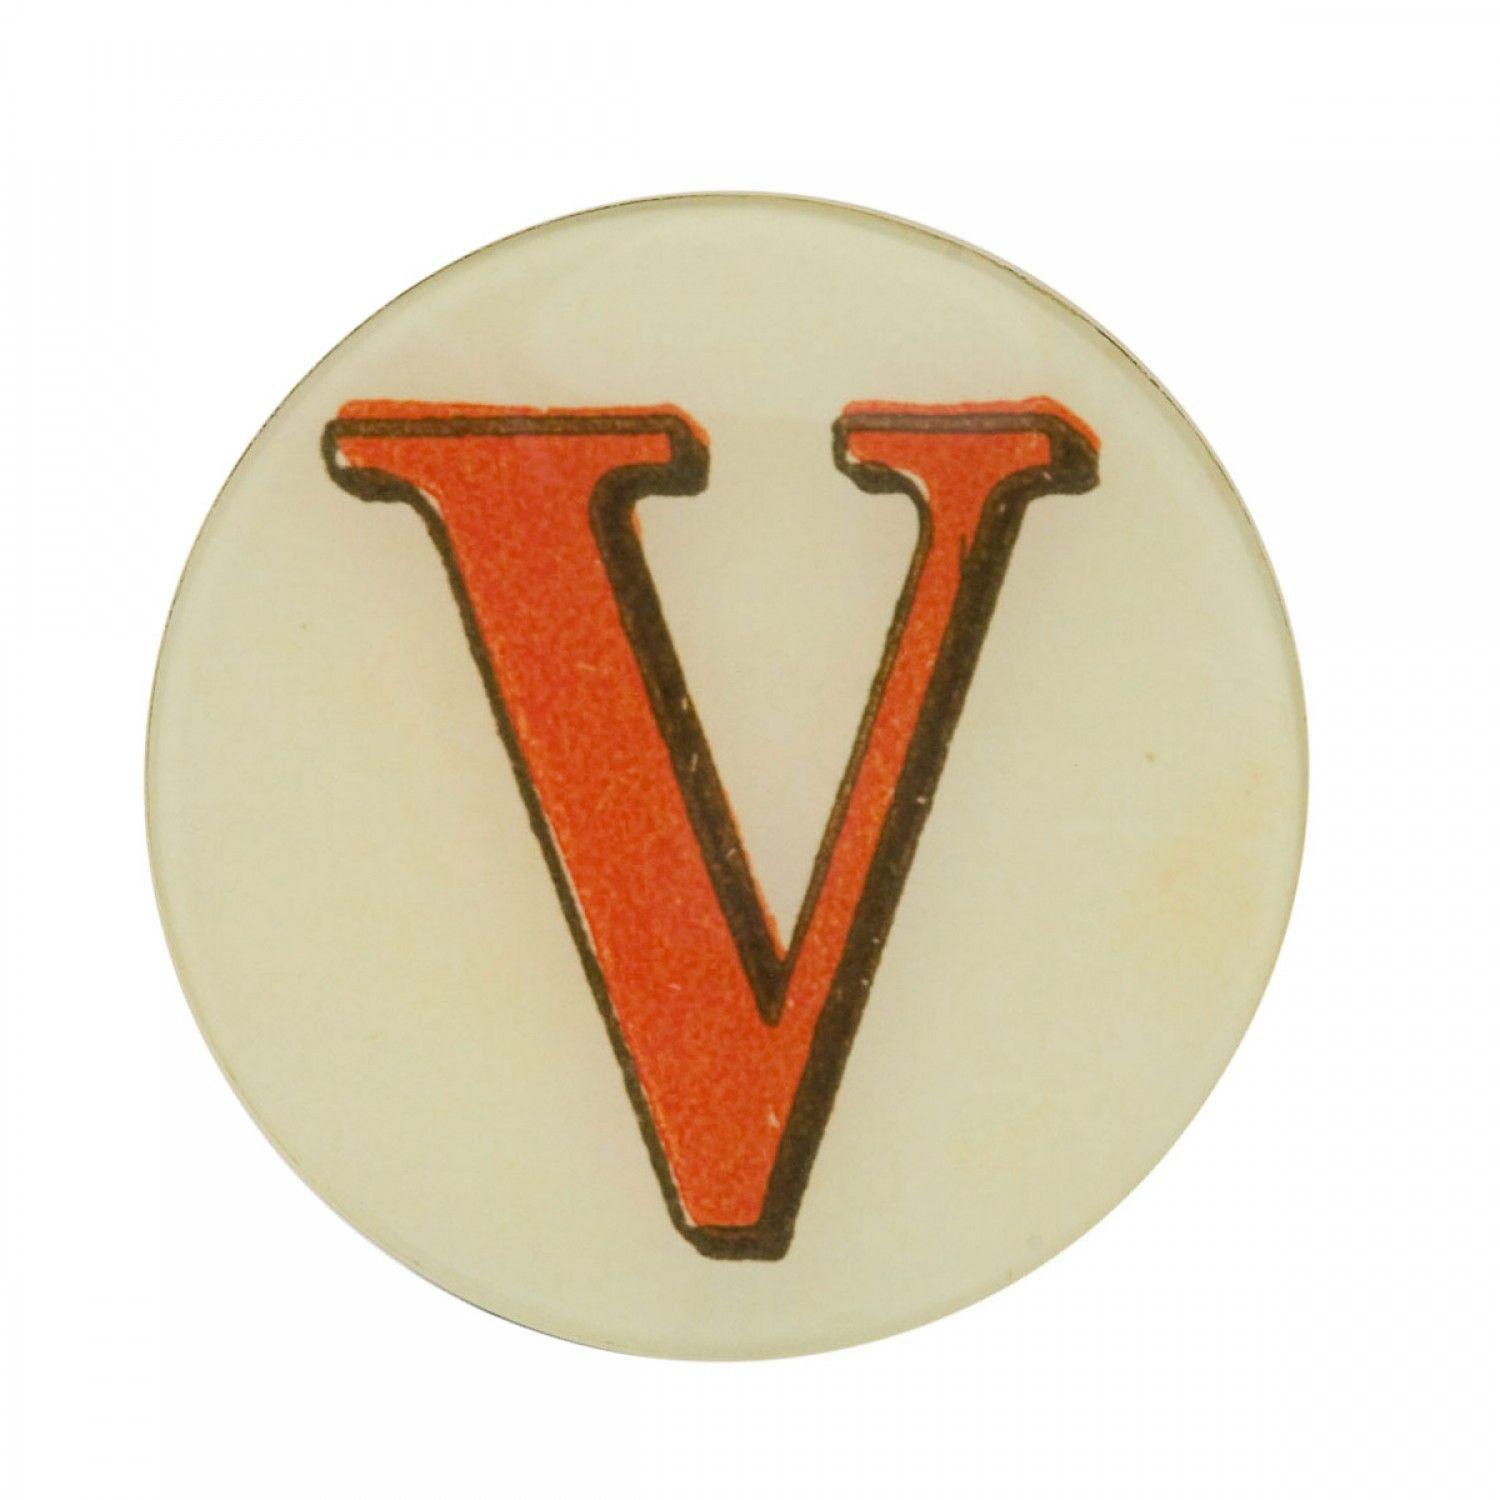 4 Letter V Logo - 3 4” Picture Plate Red Letter V